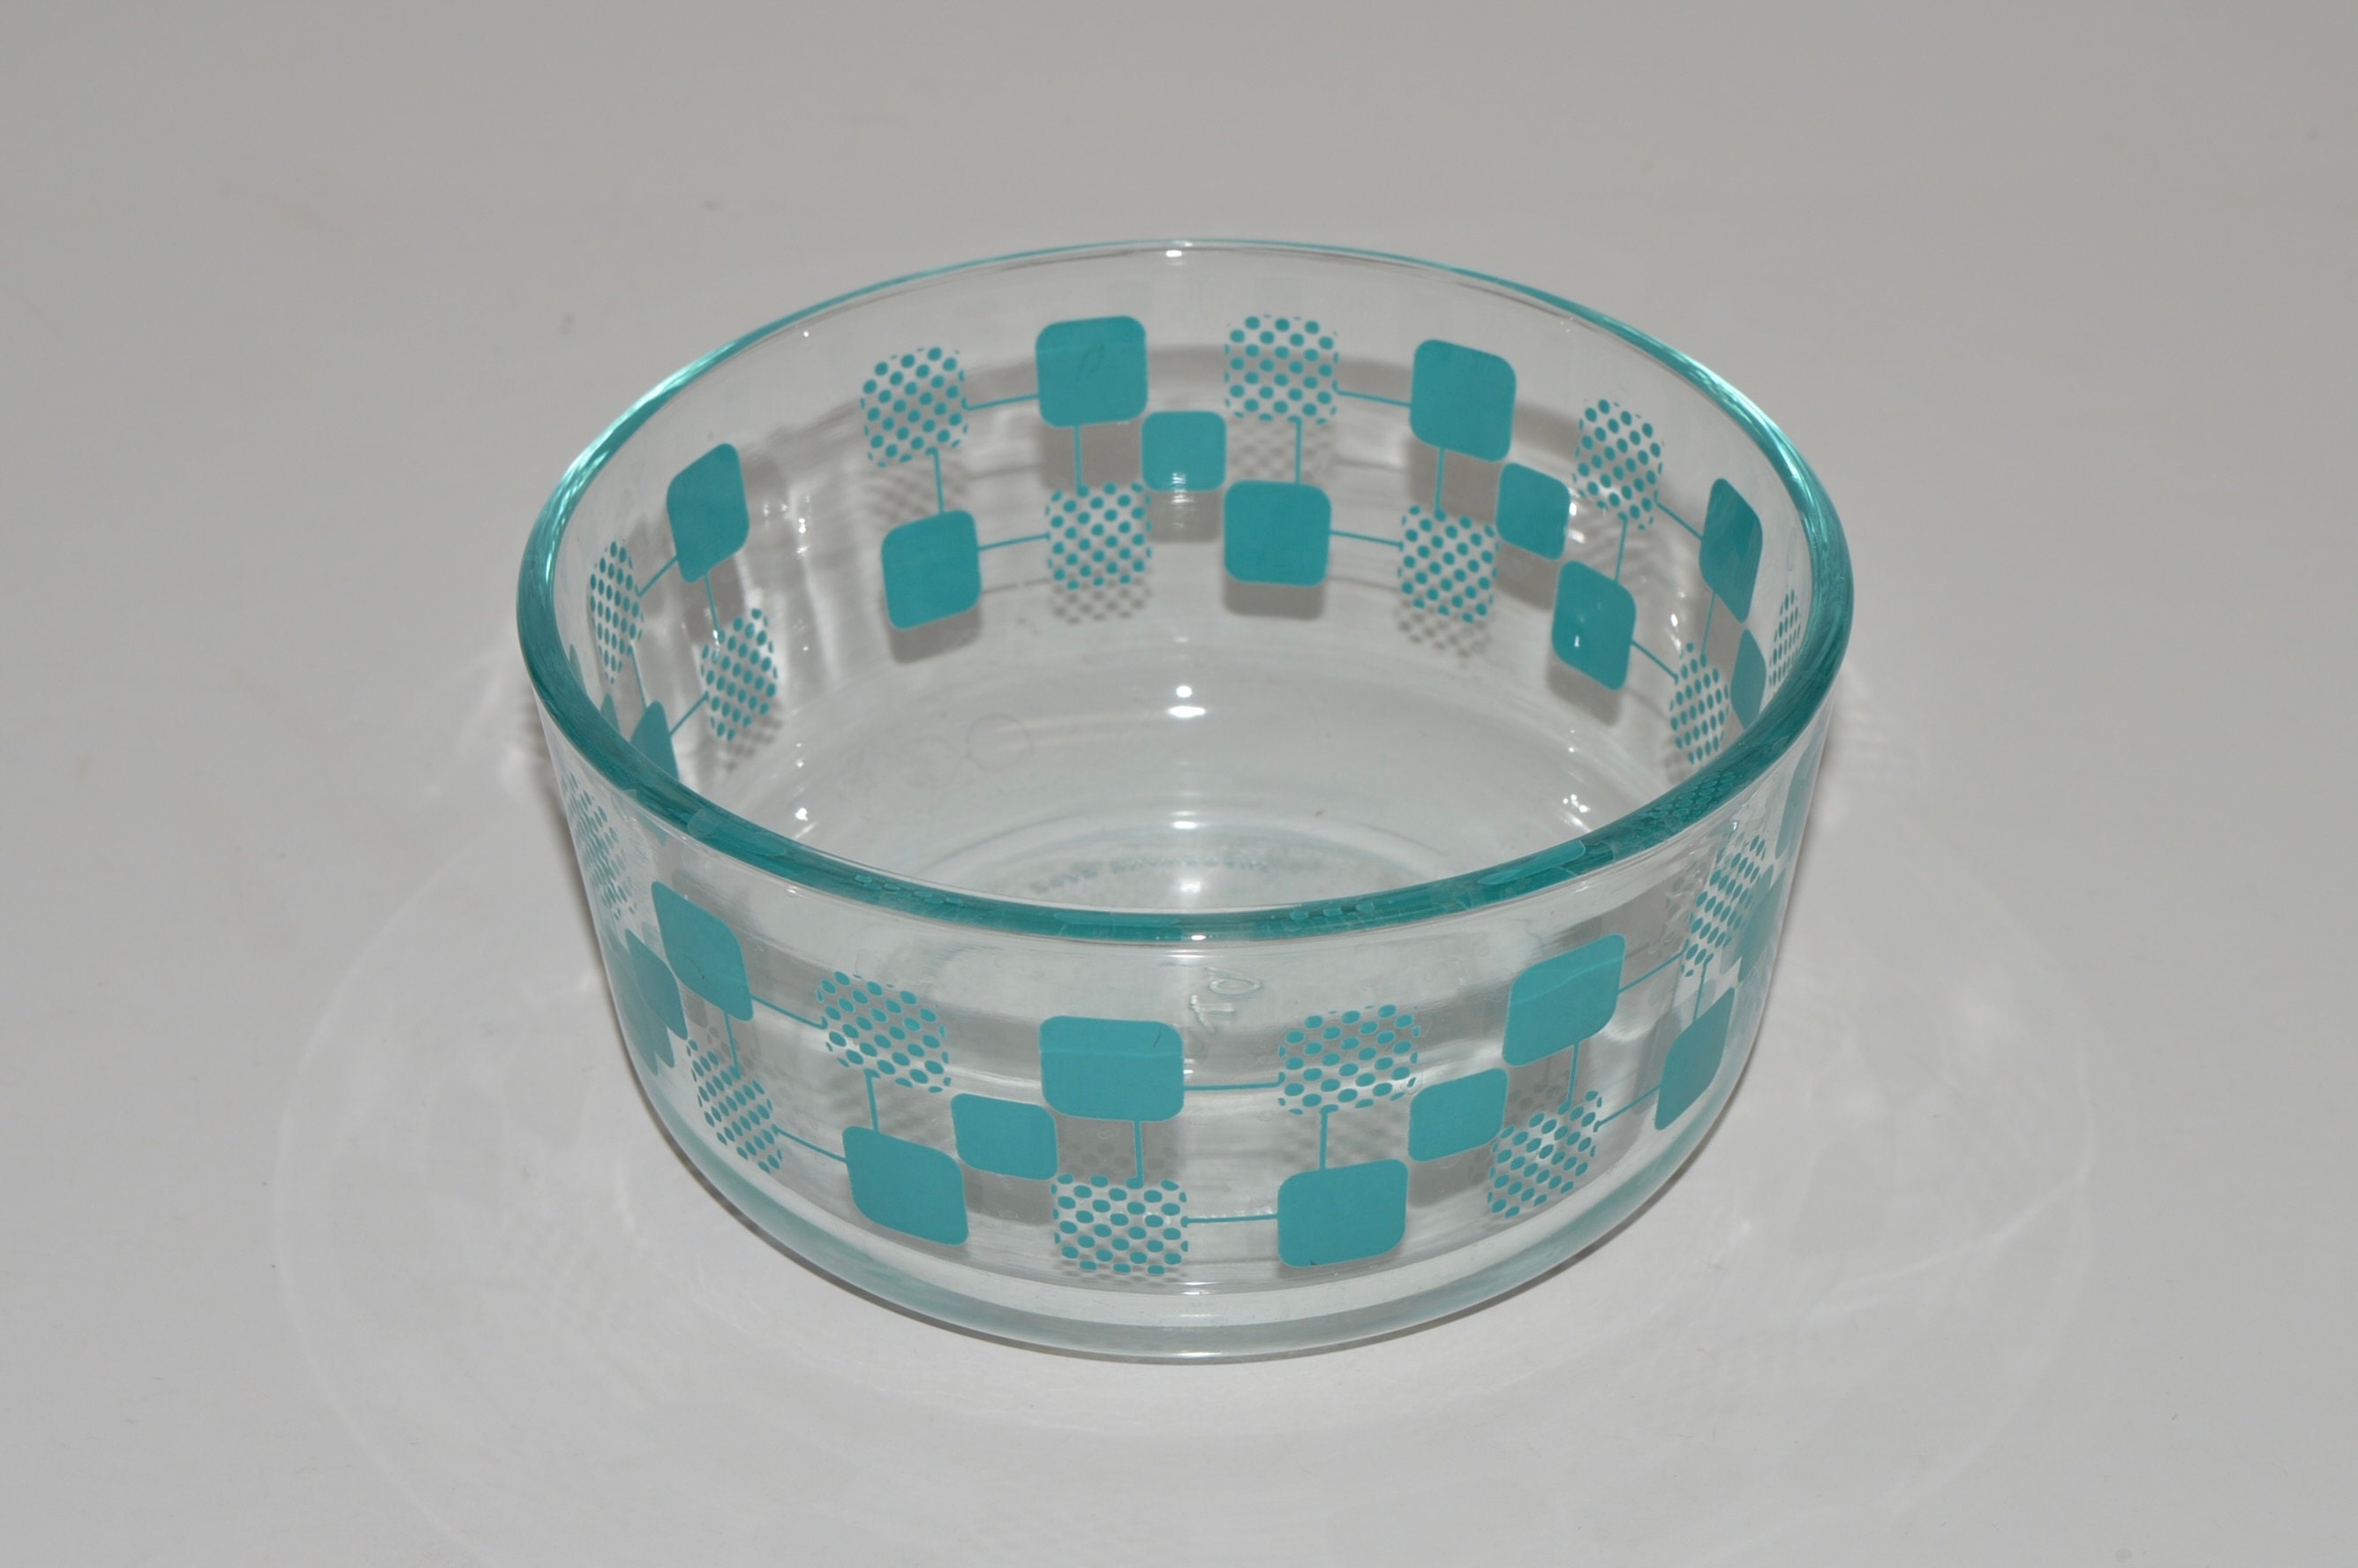 Pyrex 7201 4-Cup Glass Food Storage Bowl w/ 7201-PC Surf Blue Lid